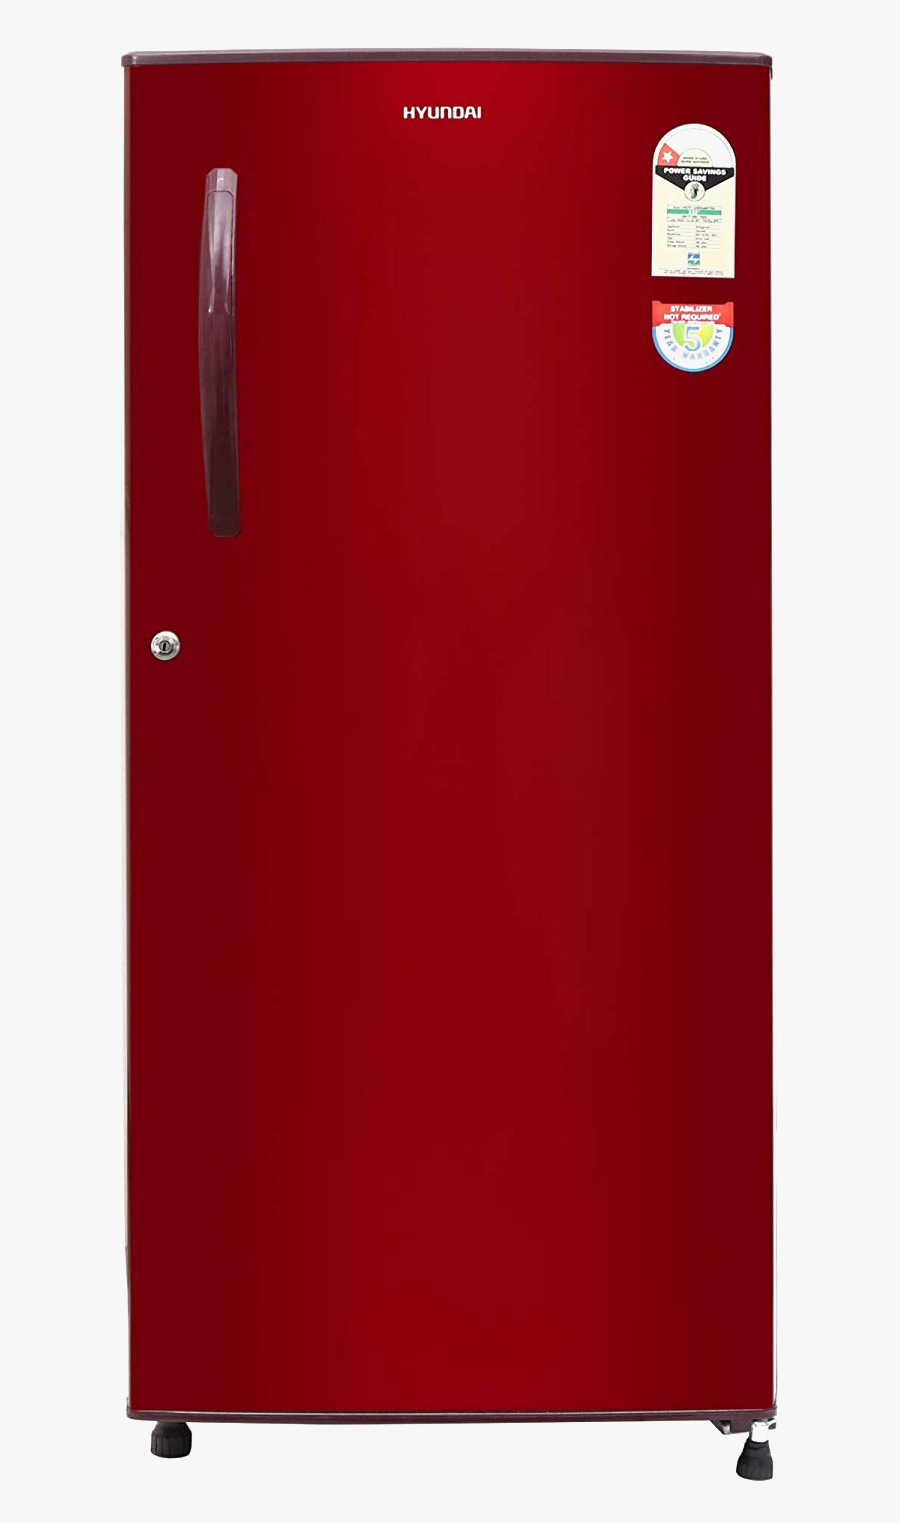 Single Door Refrigerator Png, Transparent Clipart